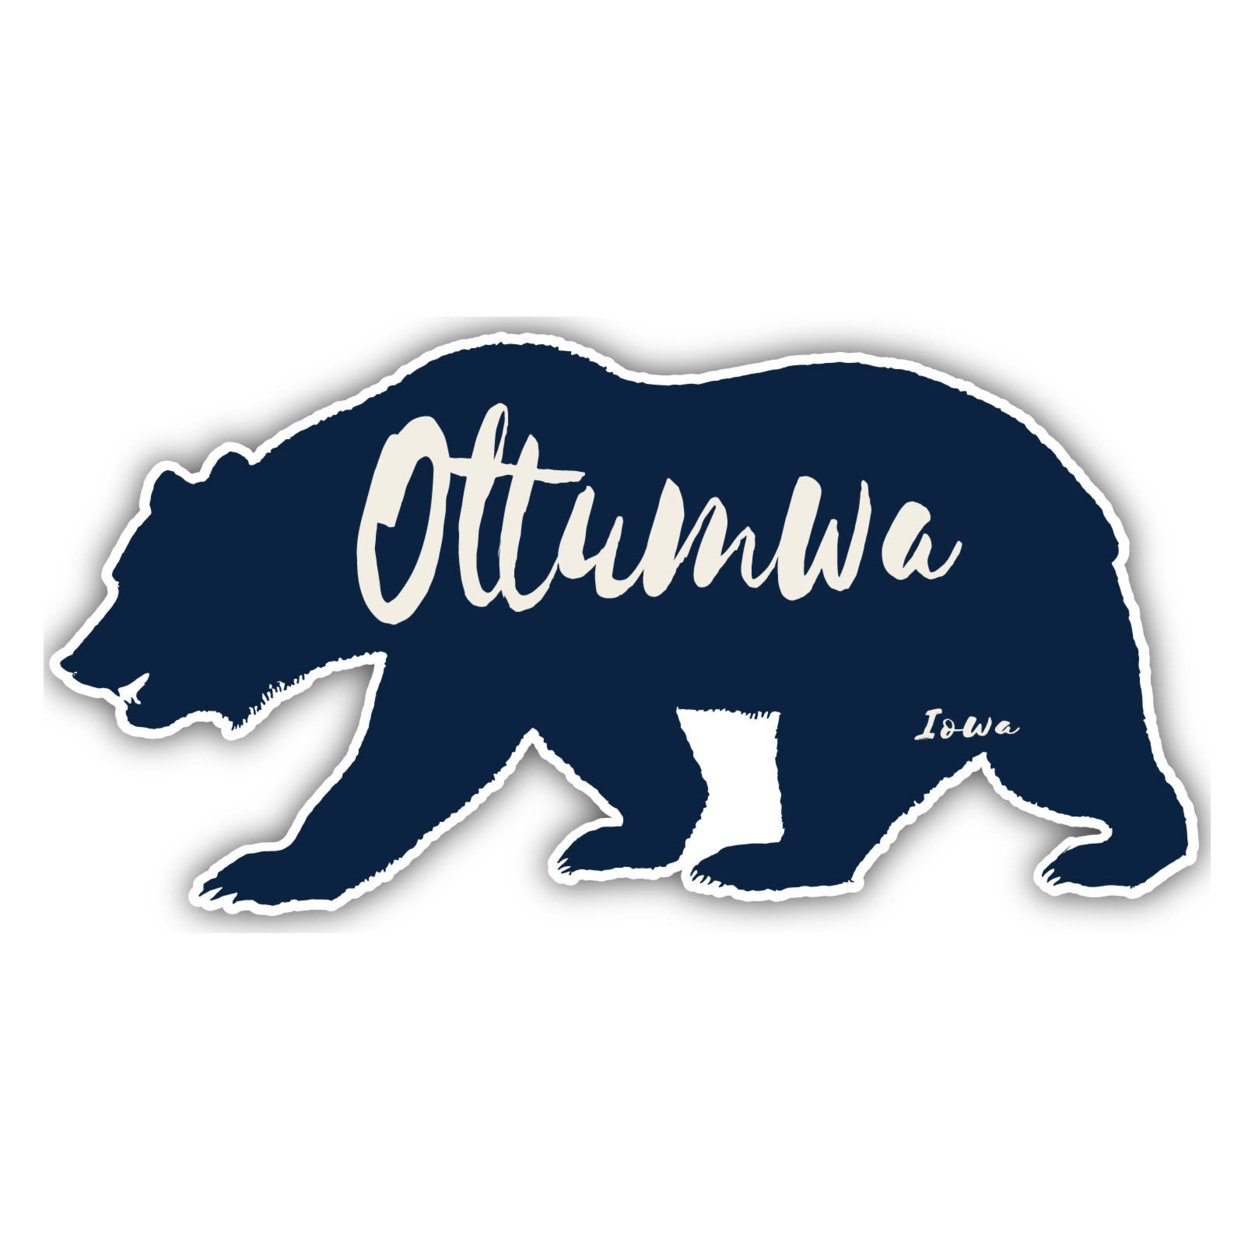 Ottumwa Iowa Souvenir Decorative Stickers (Choose Theme And Size) - Single Unit, 2-Inch, Bear